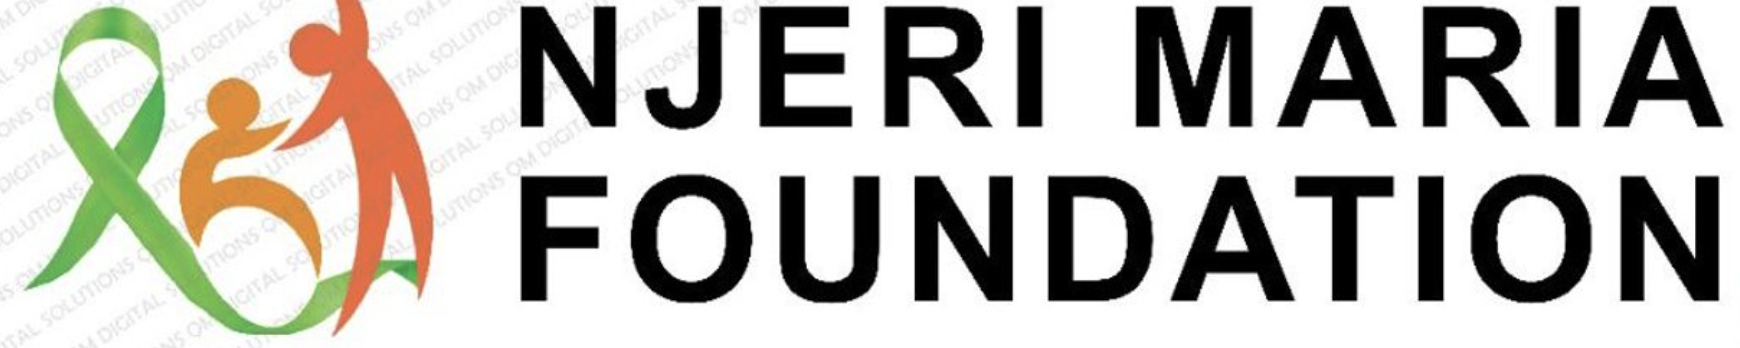 Maria Njeri Foundation logo